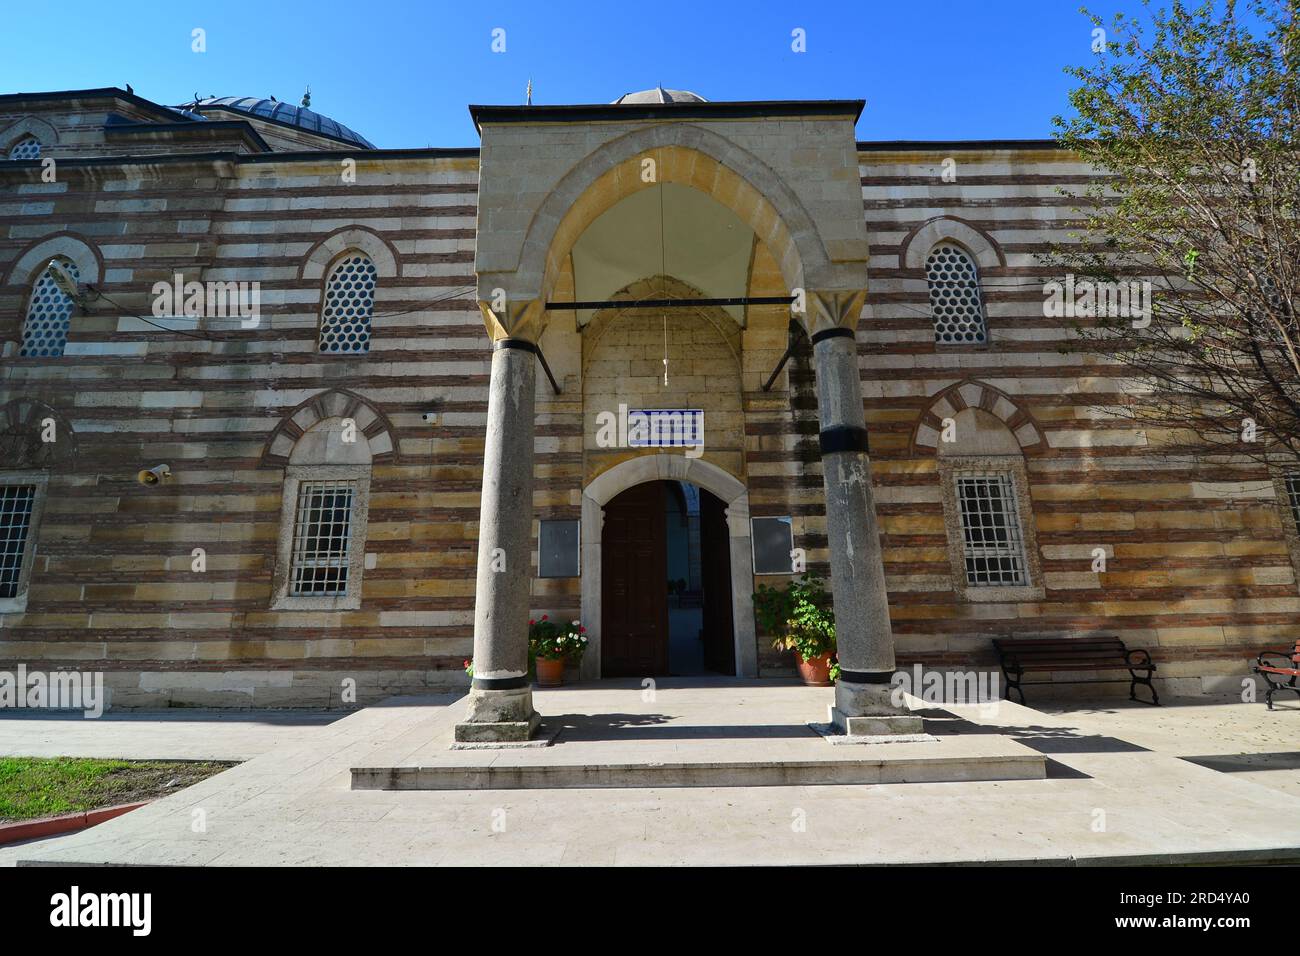 Guzelce Hasan Bey Mosque in Hayrabolu, Turkey, was built in 1499. Stock Photo